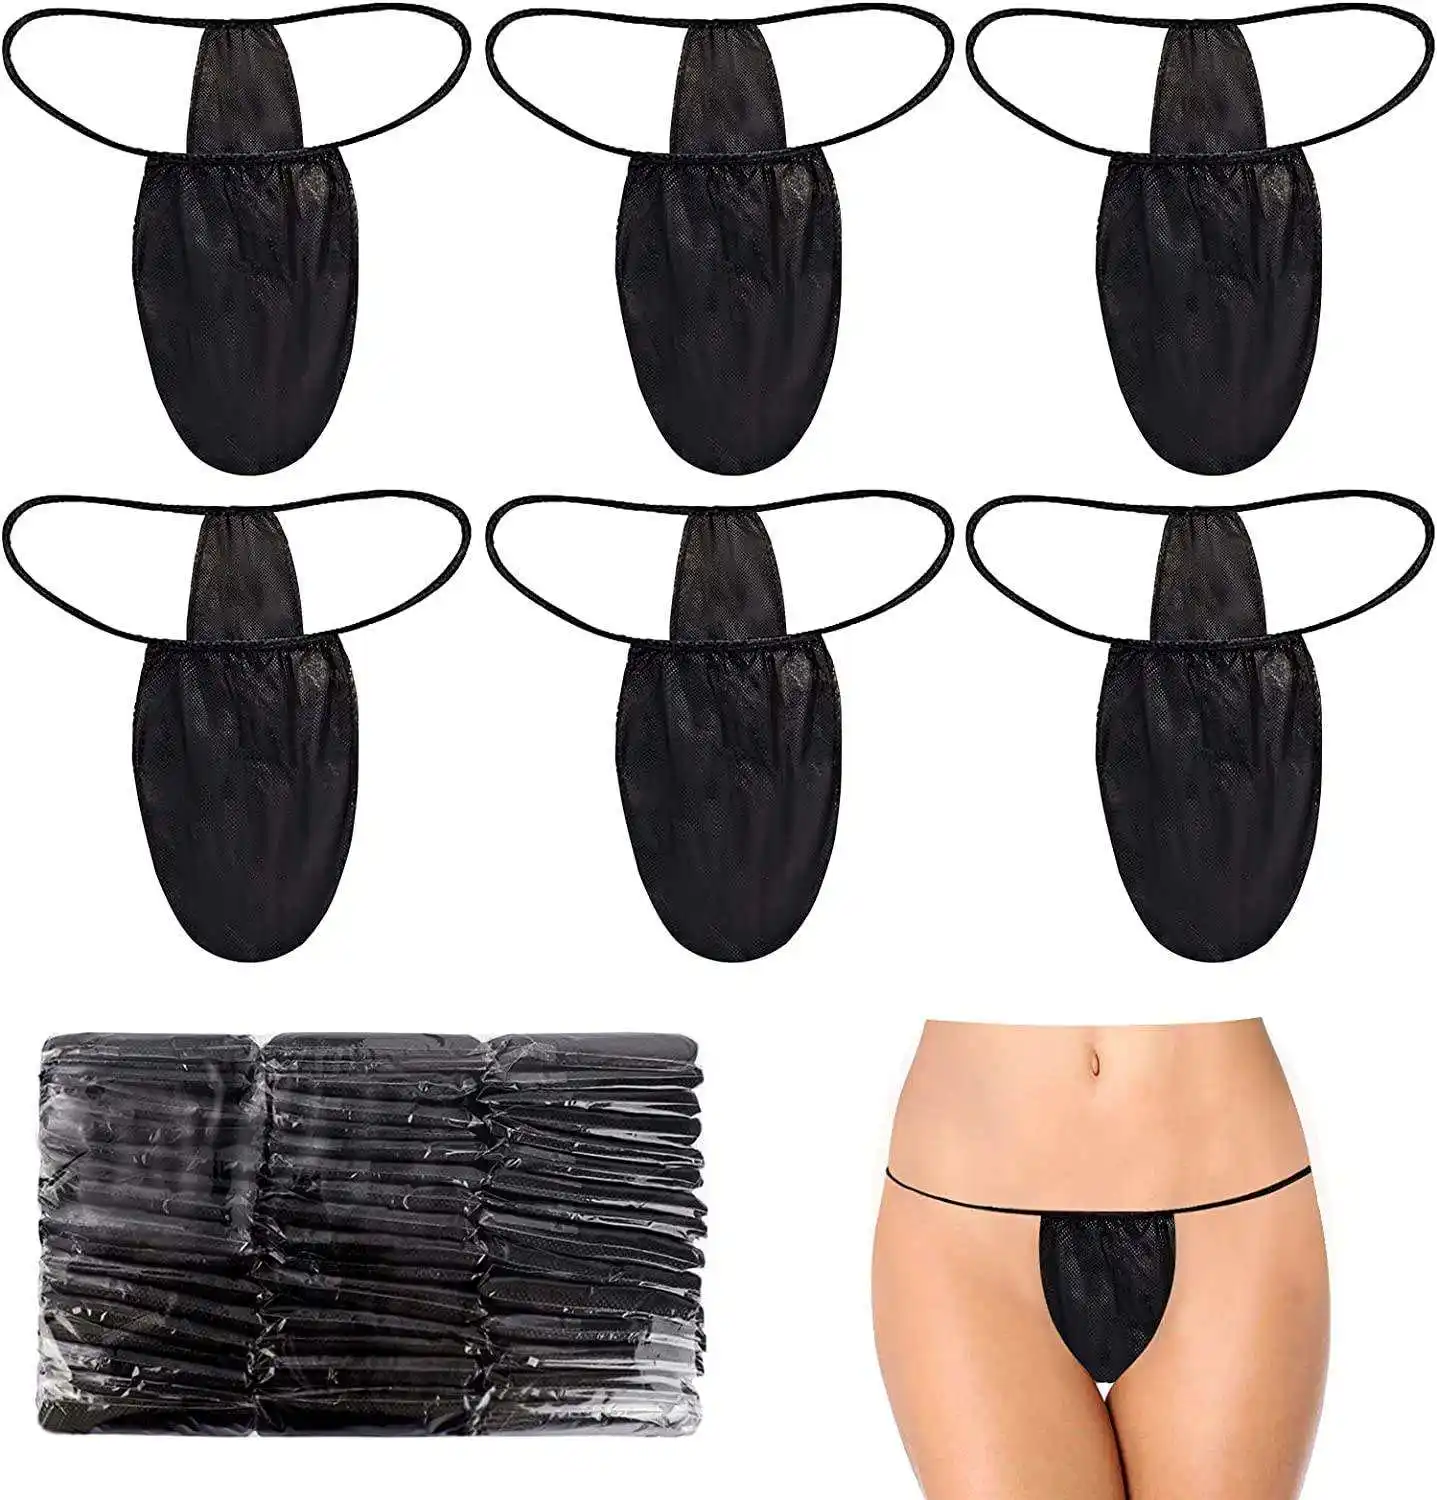 Adult black pants disposable spray tan panties g string thongs panties underwear for women spray tanning